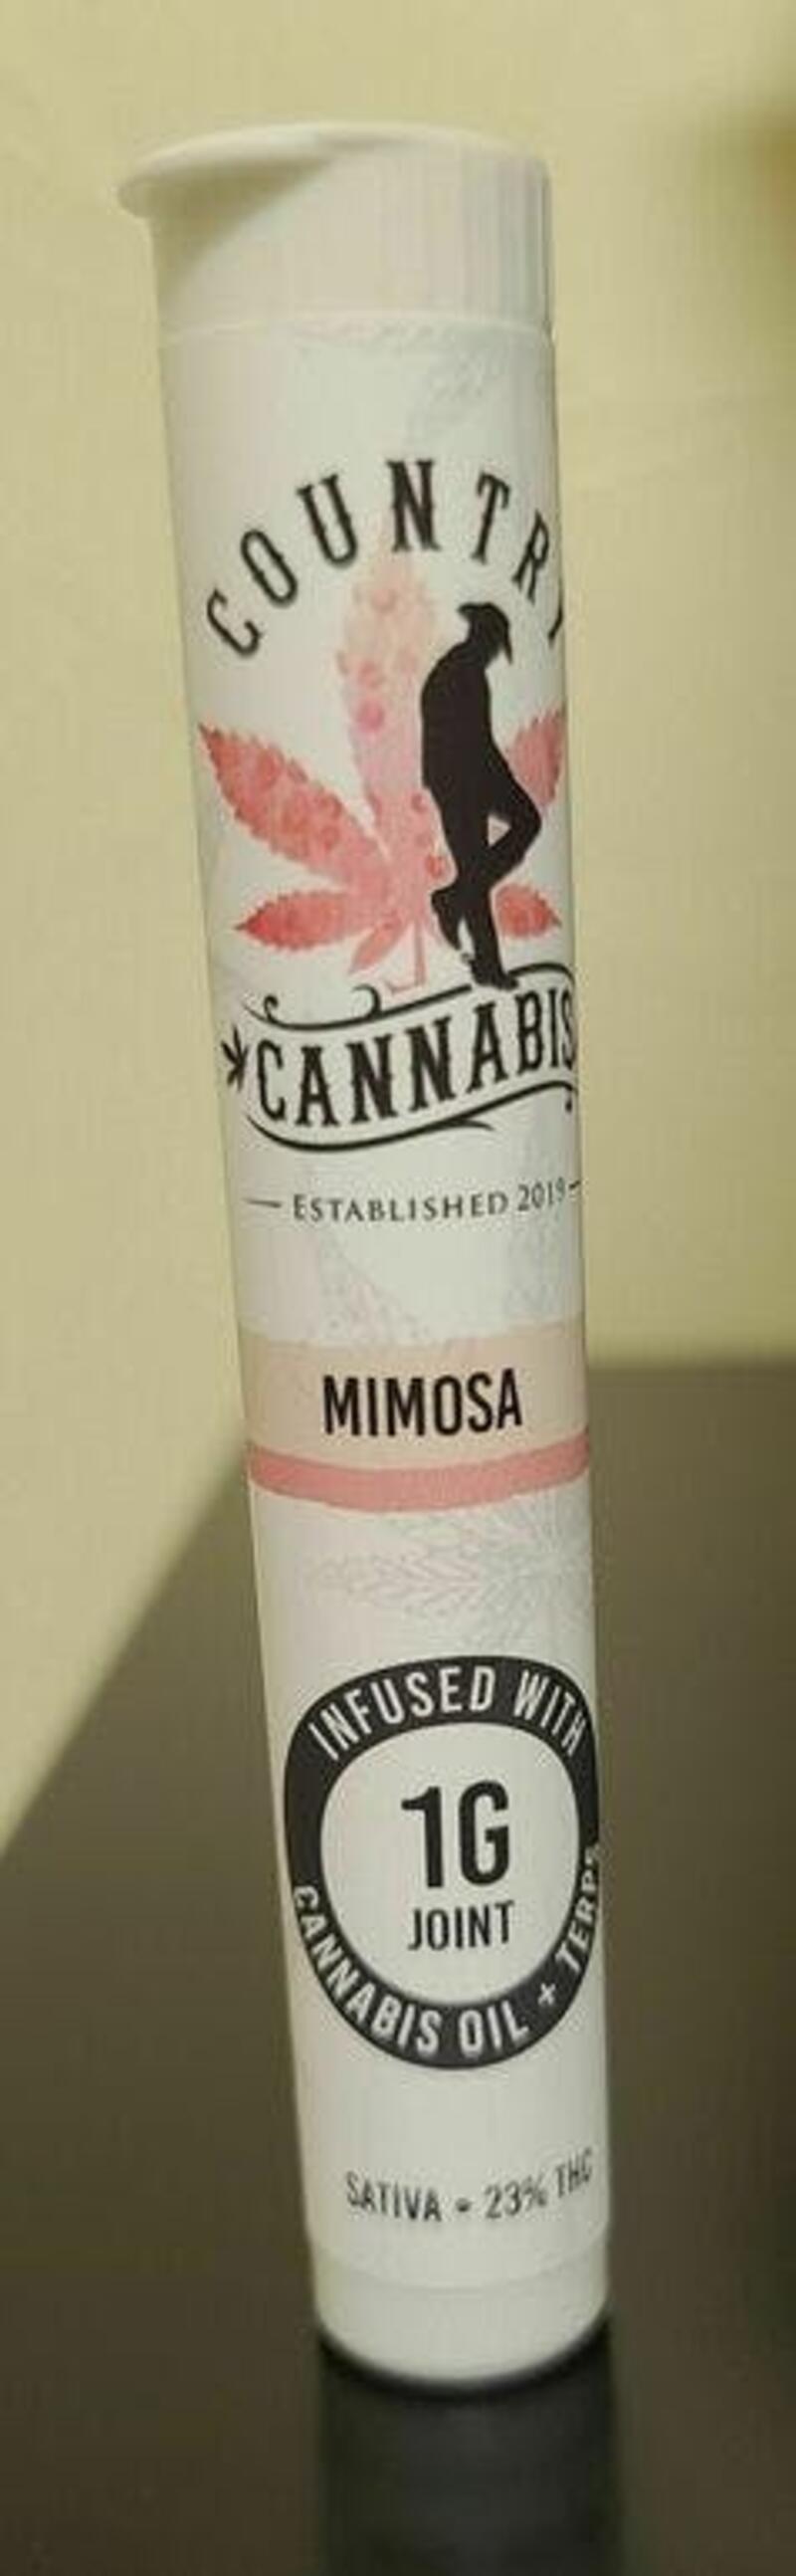 CC Mimosa 1 g preroll